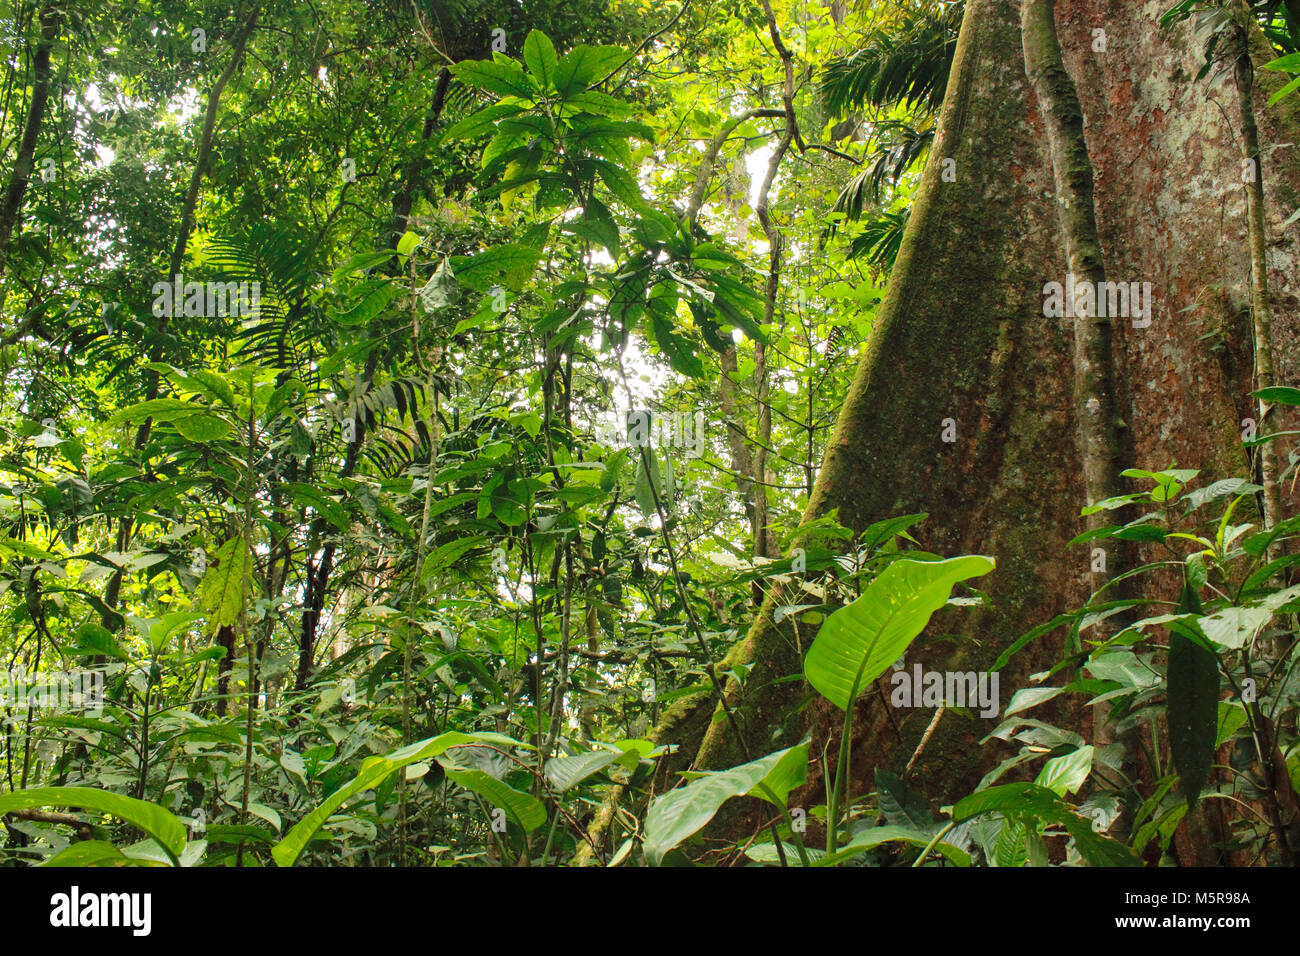 Tropical jungle with giant trees Henri Pittier National Park Venezuela Stock Photo